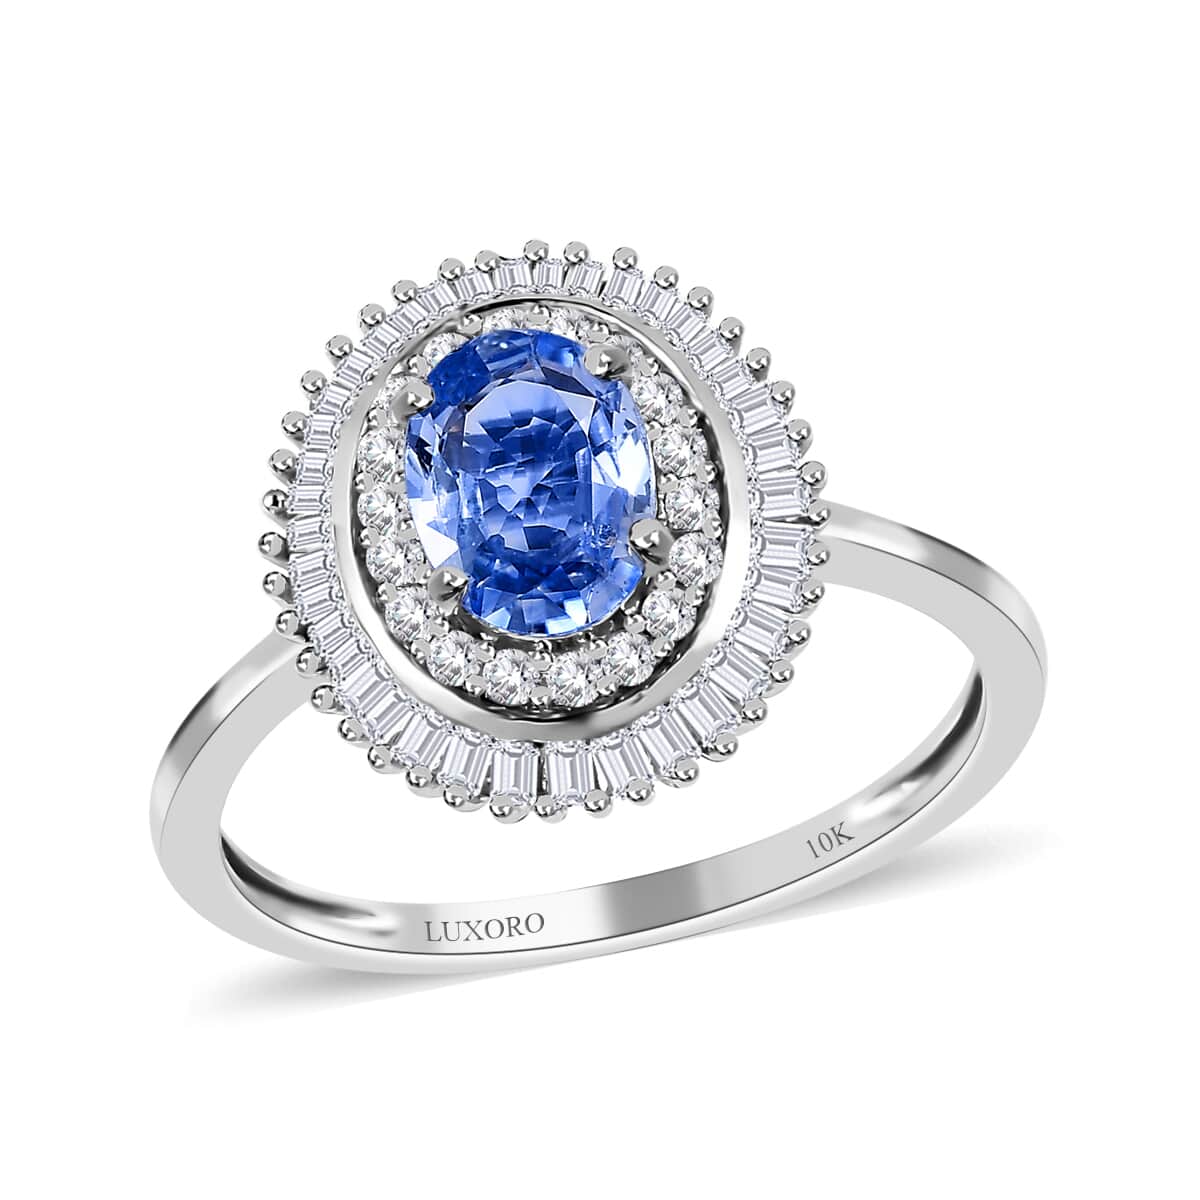 Luxoro 10K White Gold Premium Ceylon Blue Sapphire and Diamond Double Halo Ring (Size 6.0) 1.20 ctw image number 0